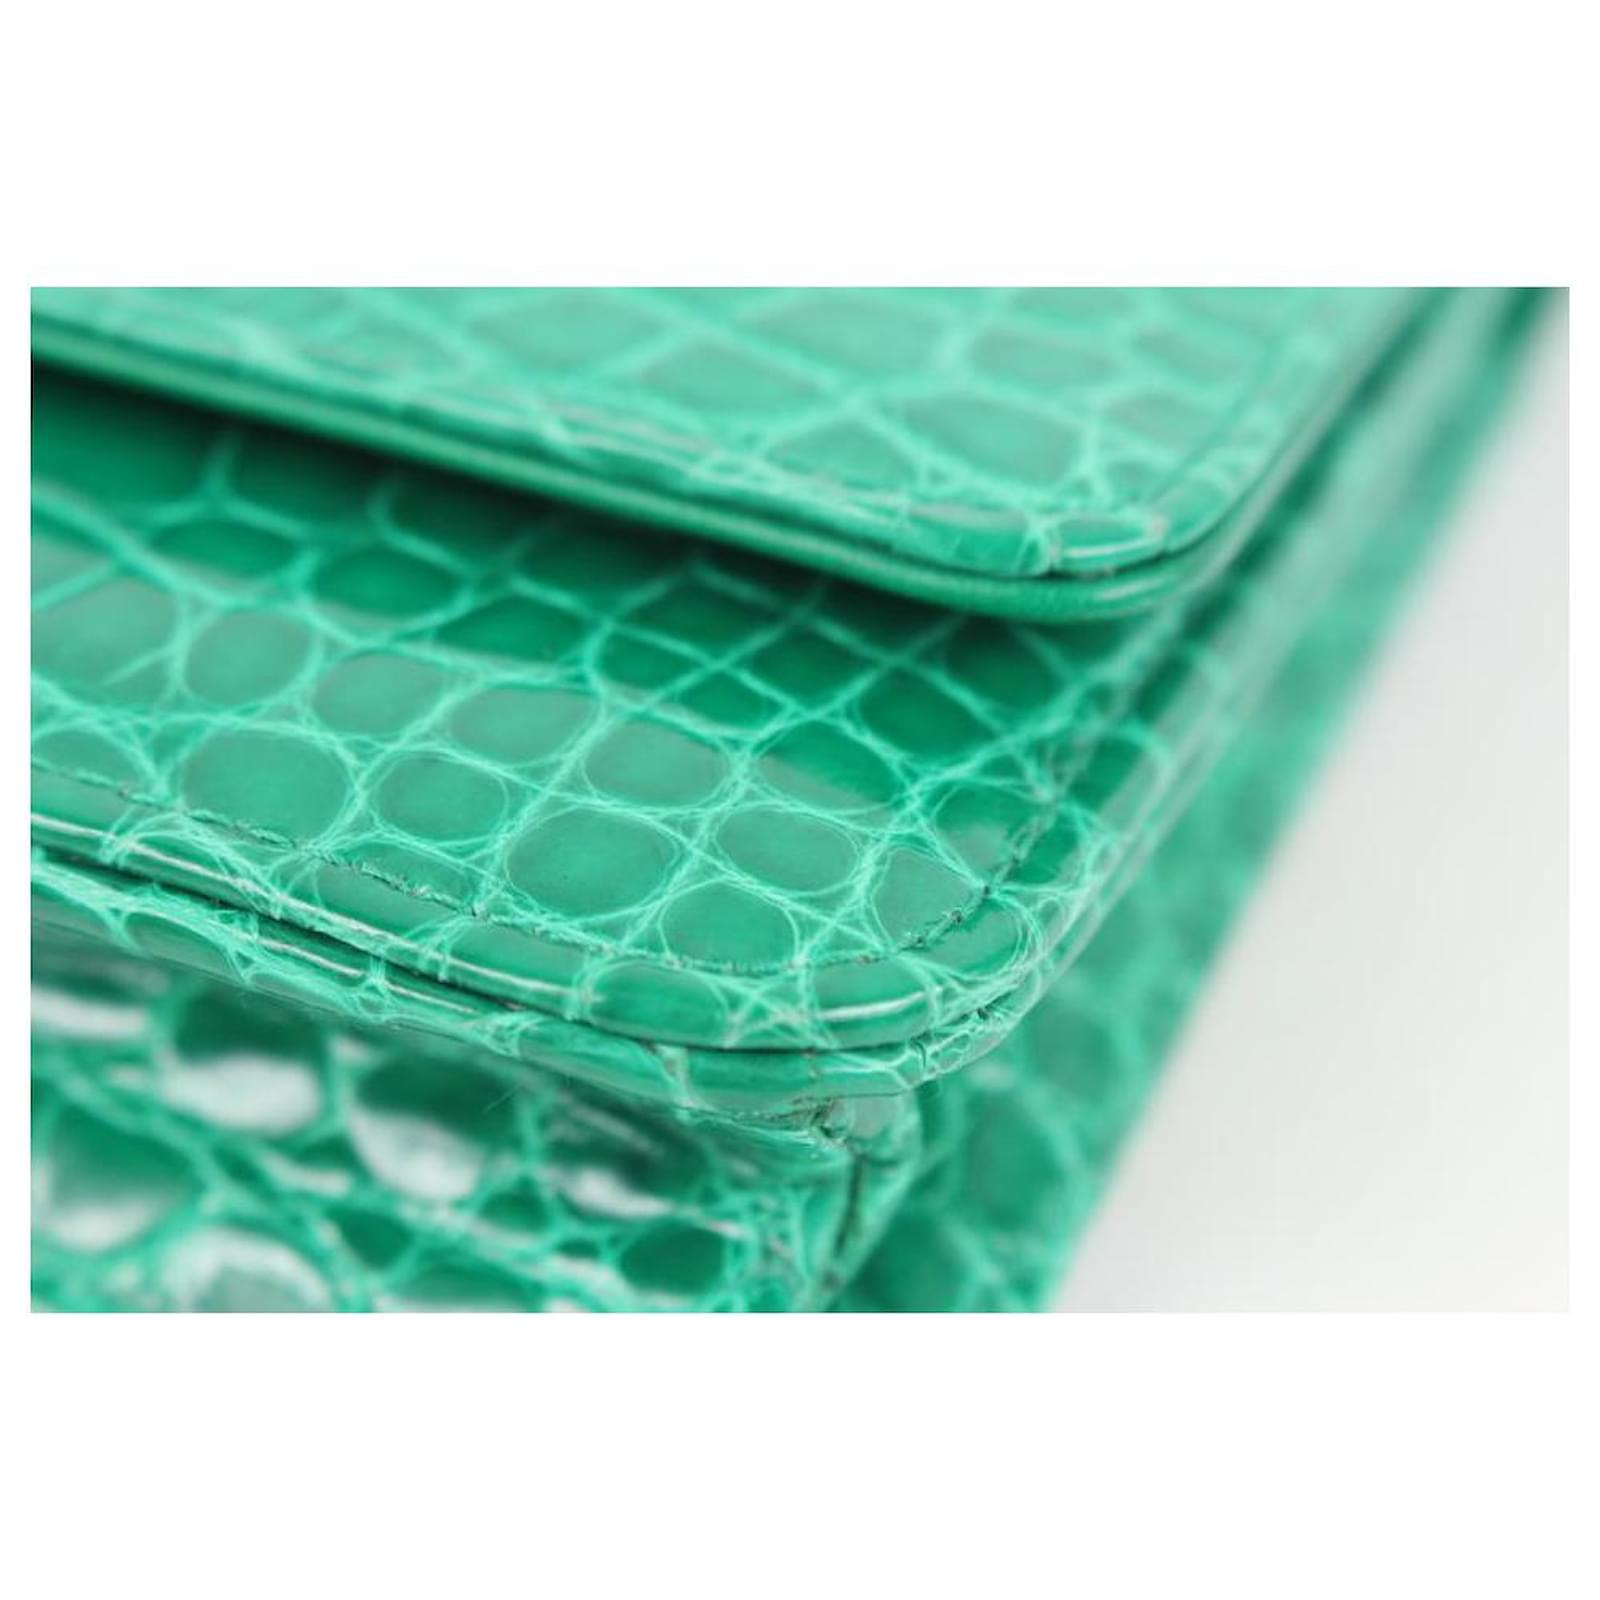 Chanel Ultra Rare Emerald Green Alligator Wallet on Chain SHW WOC